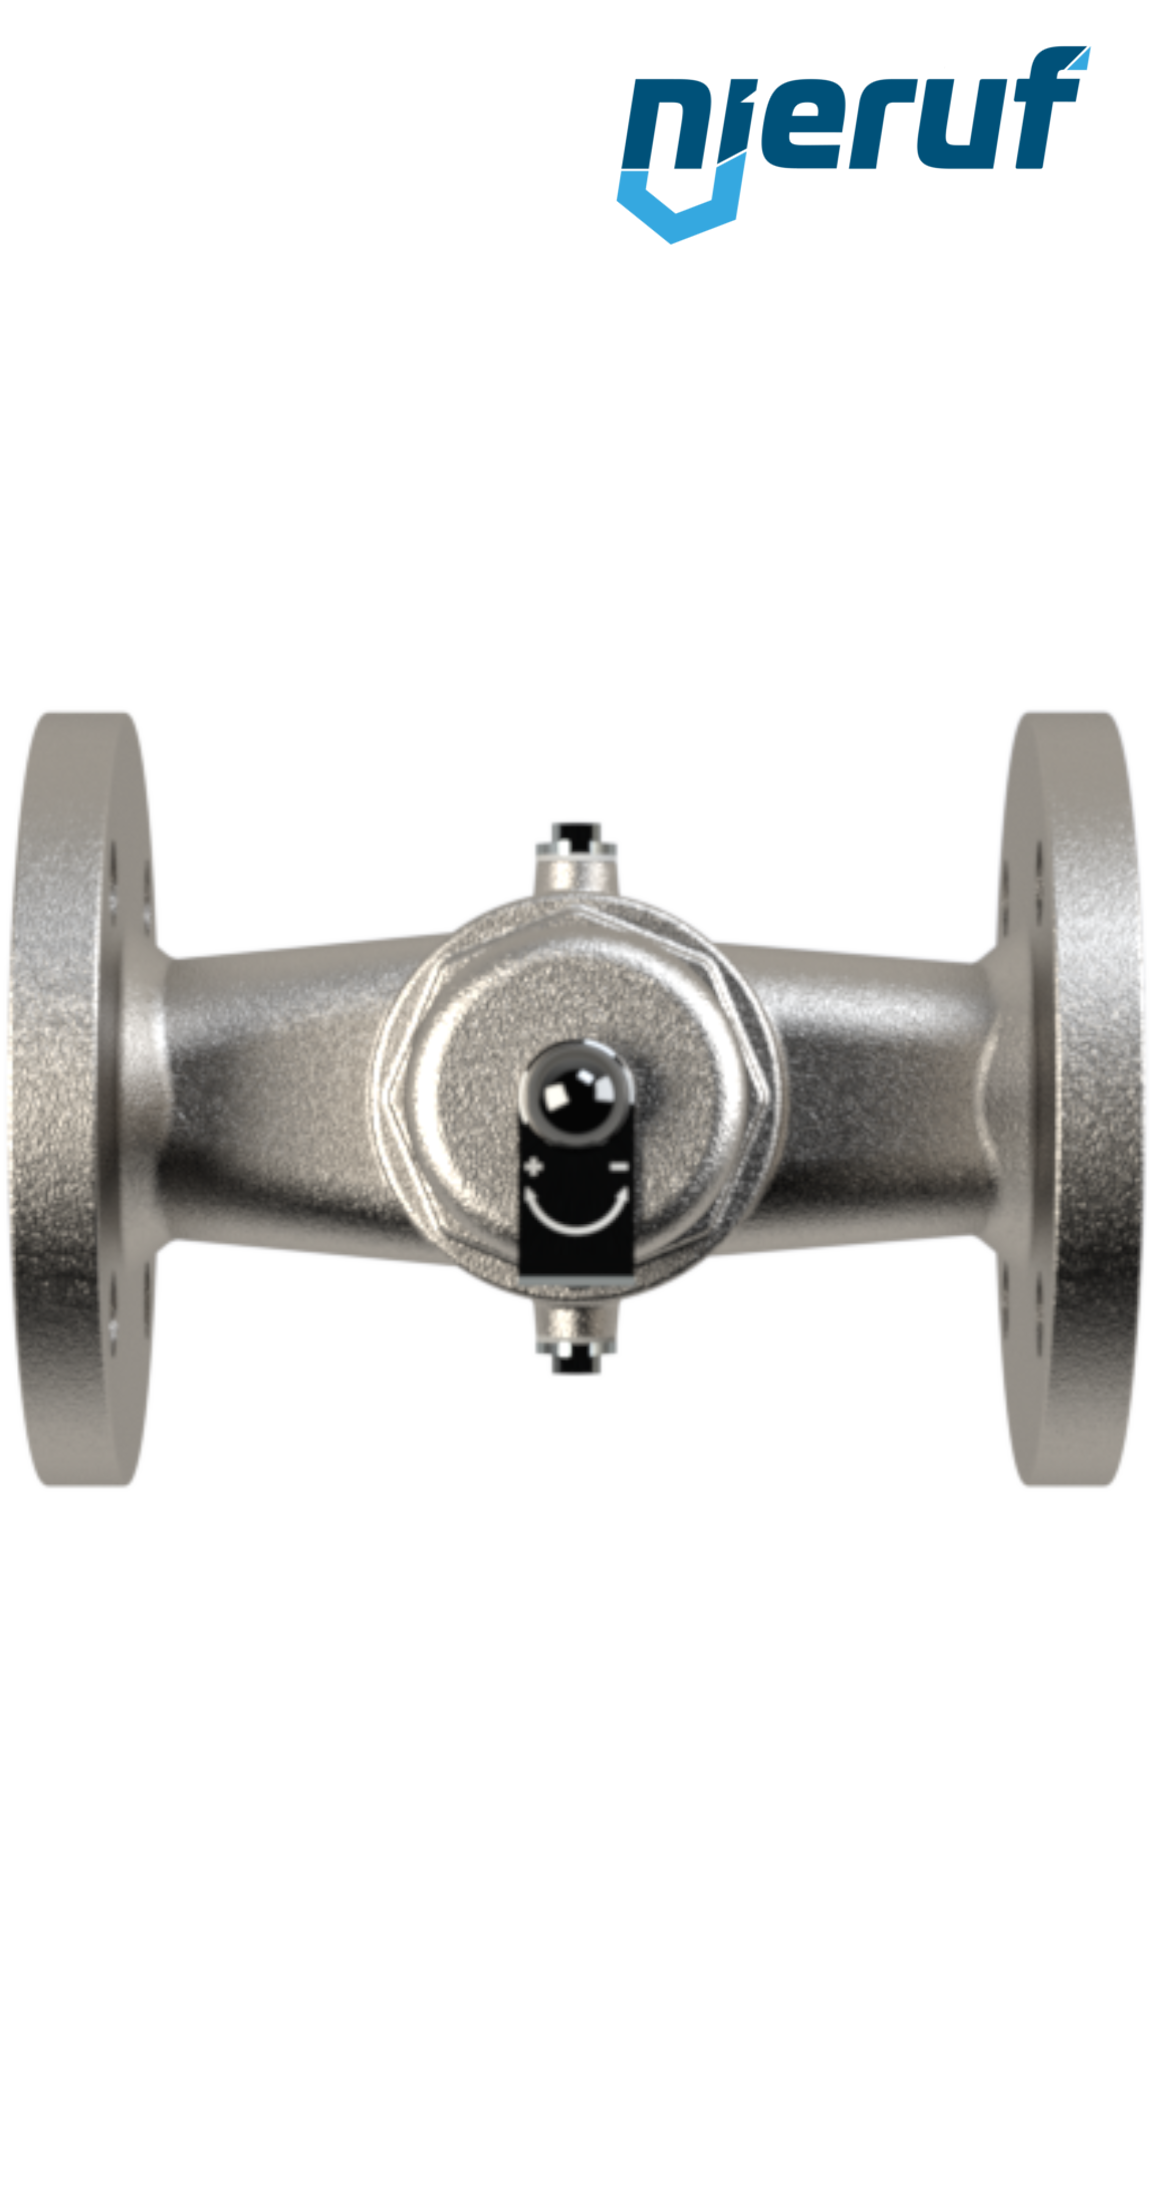 Flange-pressure reducing valve DN 50 PN40 DM08 stainless steel FKM 1.0 - 8.0 bar